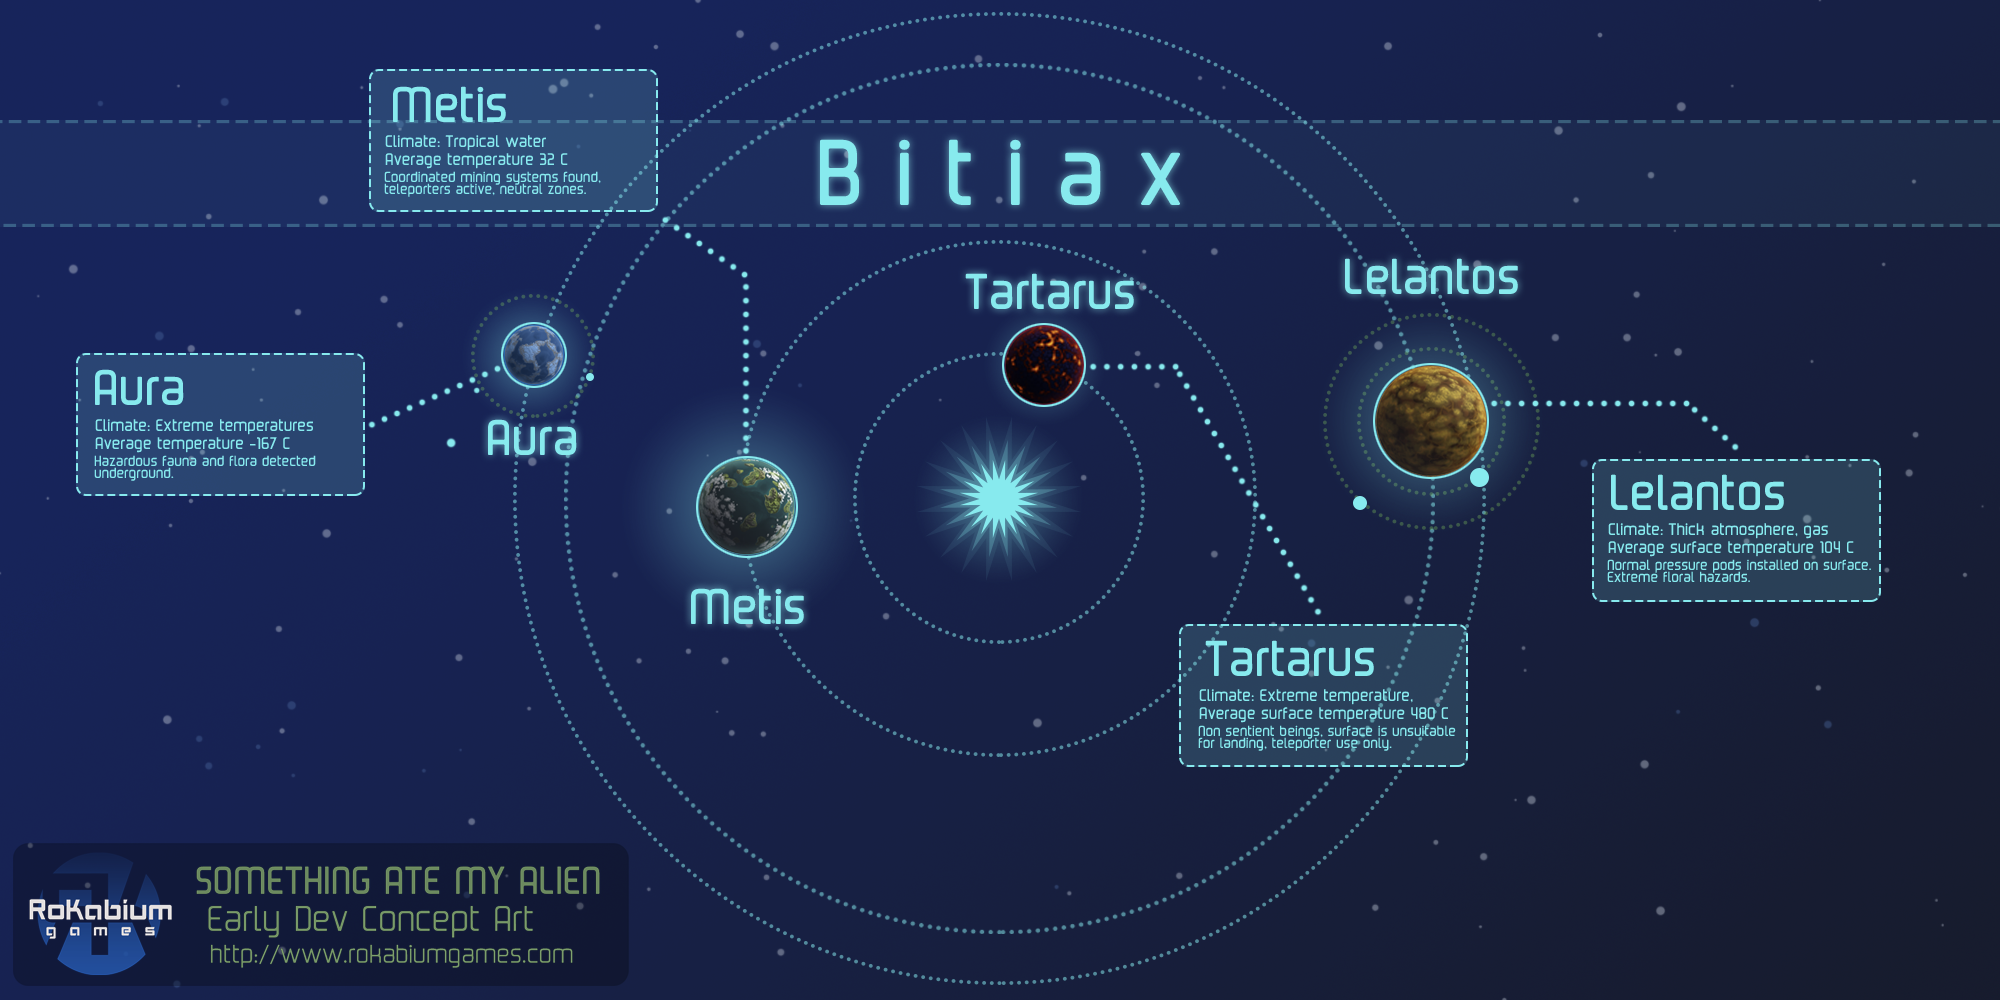 SAMA Bitiax solar system